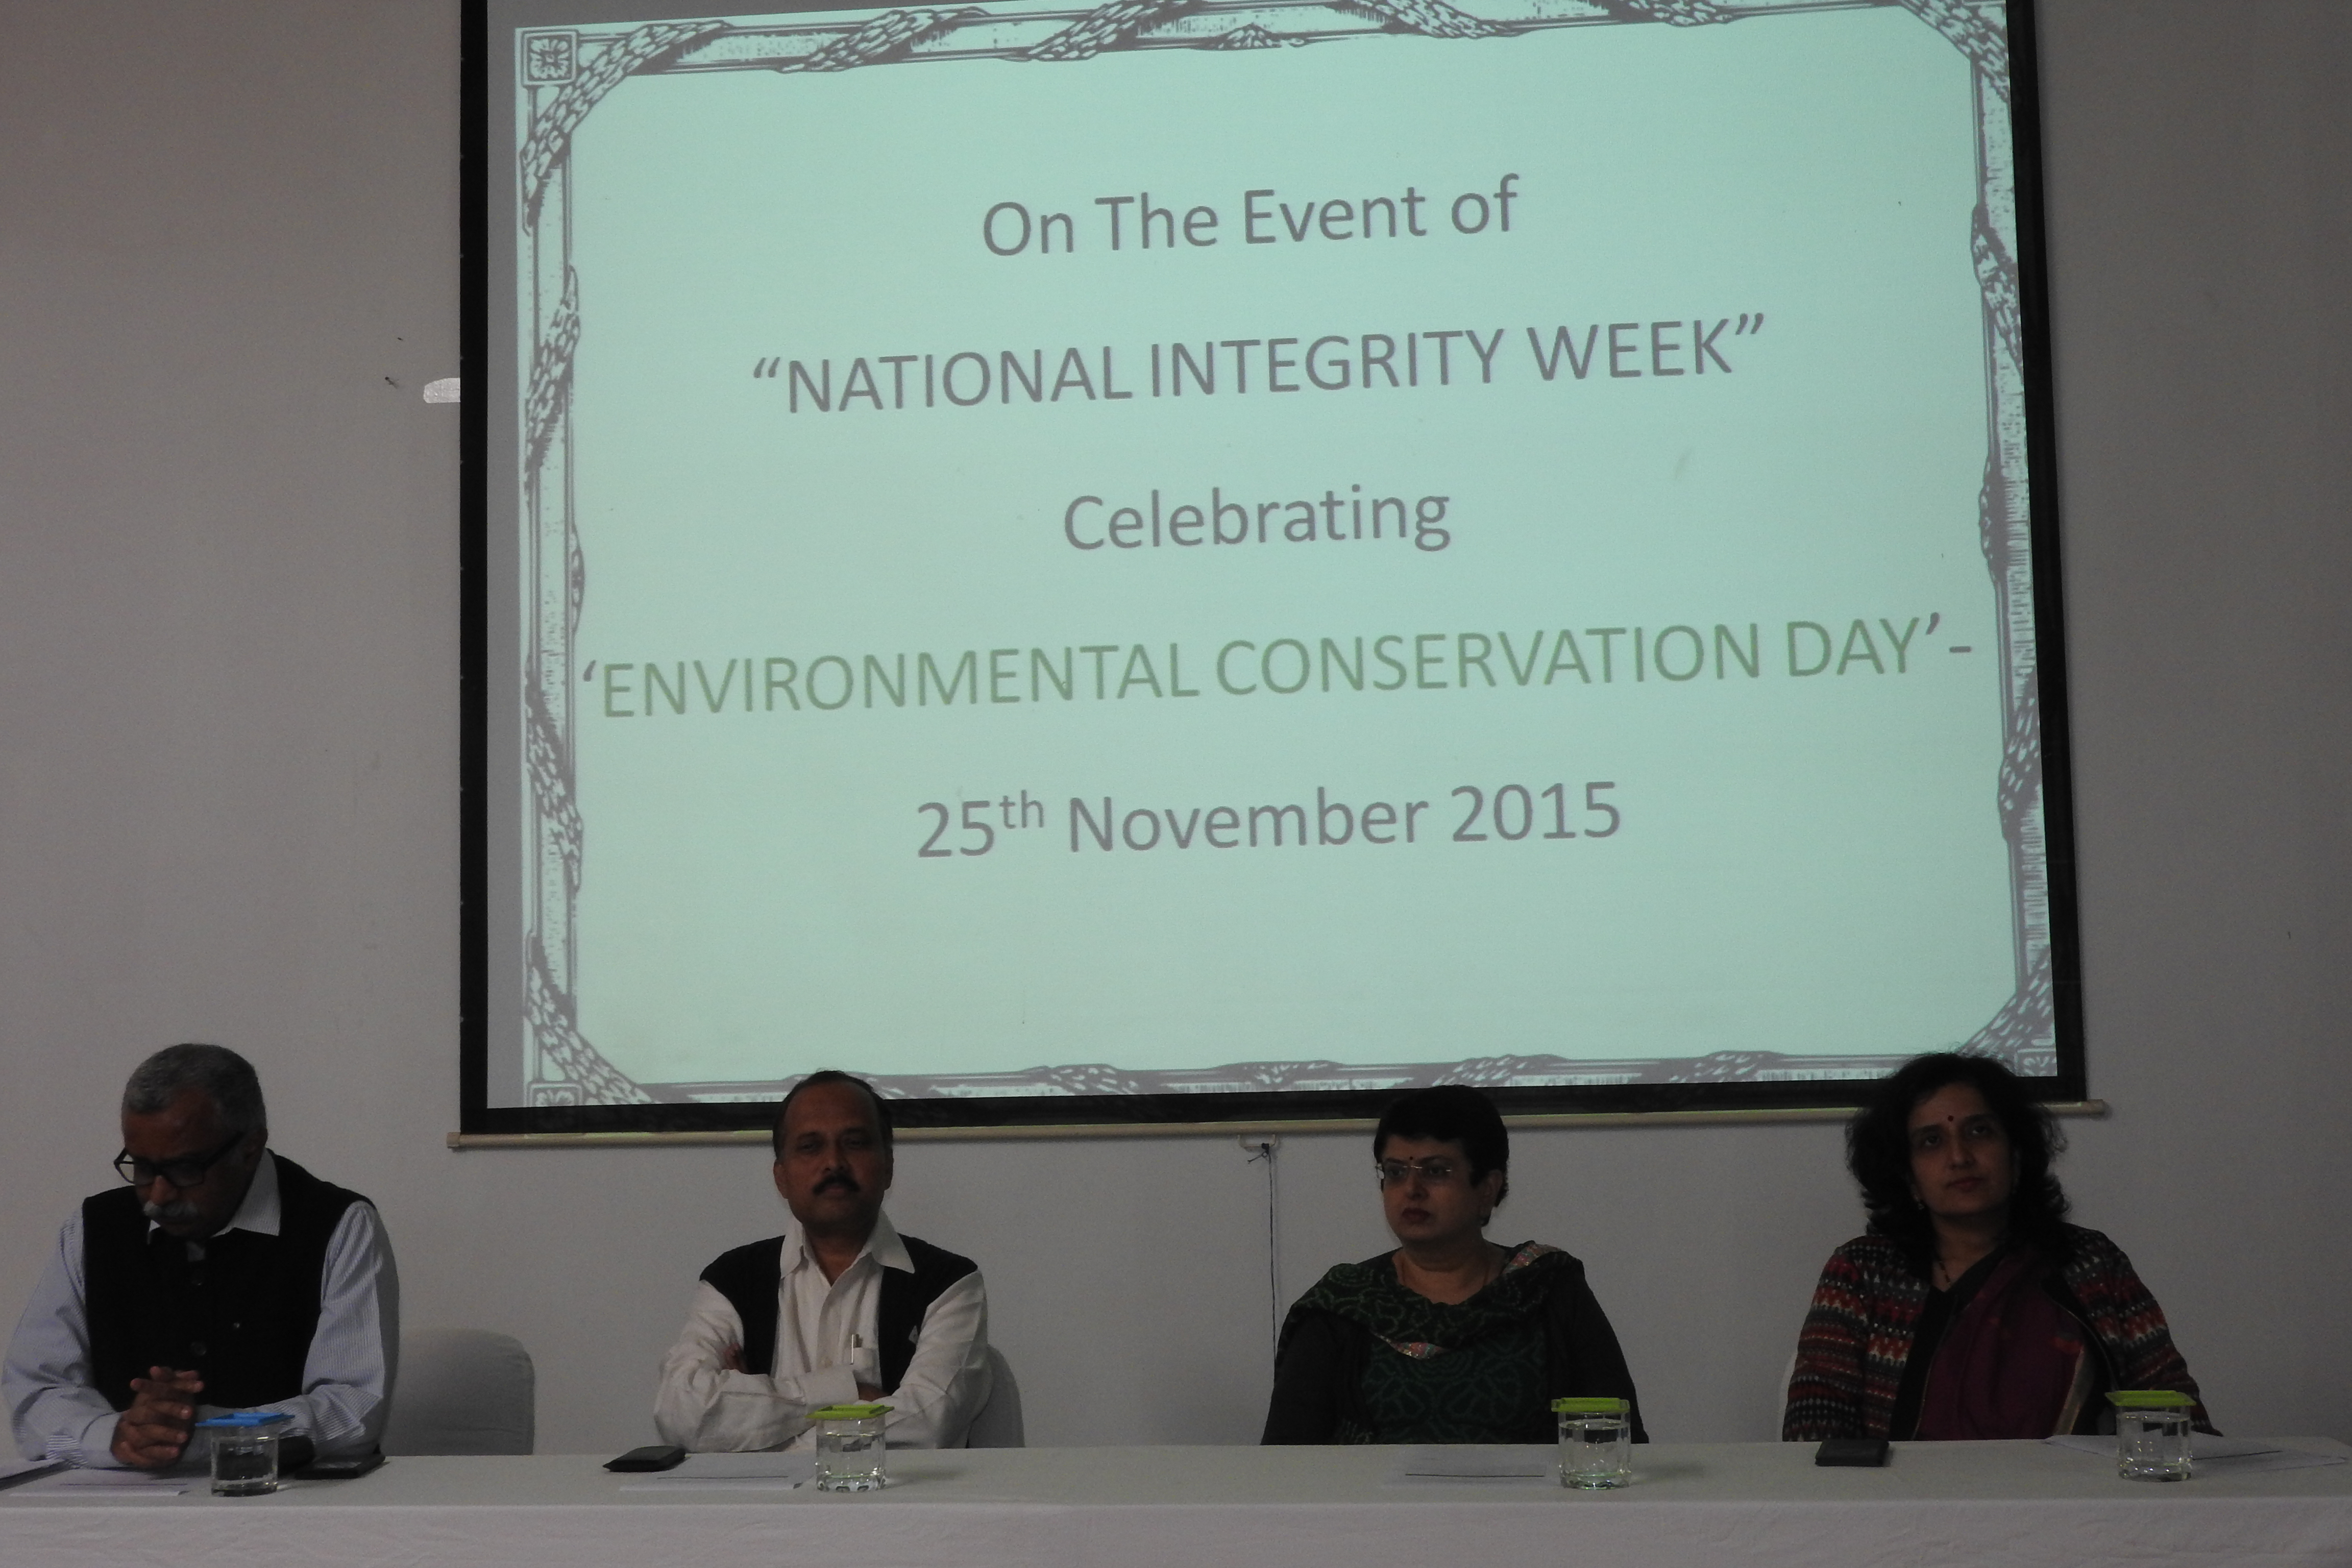 Environmental Conservation Day 25th November 2015